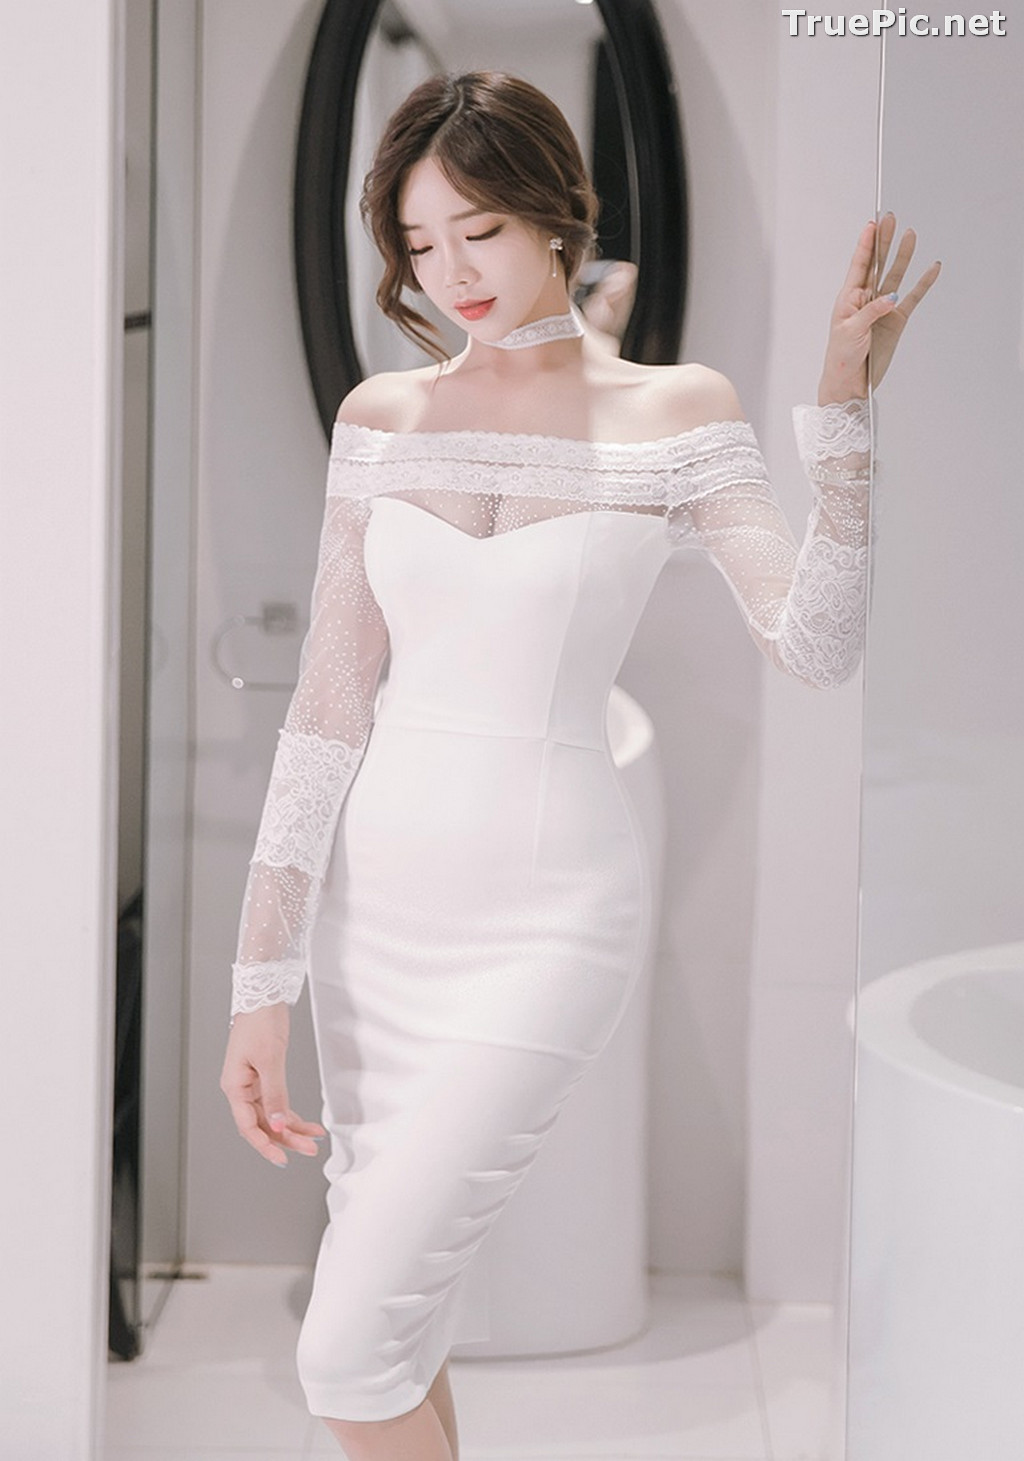 Image Korean Fashion Model - Kang Eun Wook - Slim Fit Bodycon Dress - TruePic.net - Picture-11